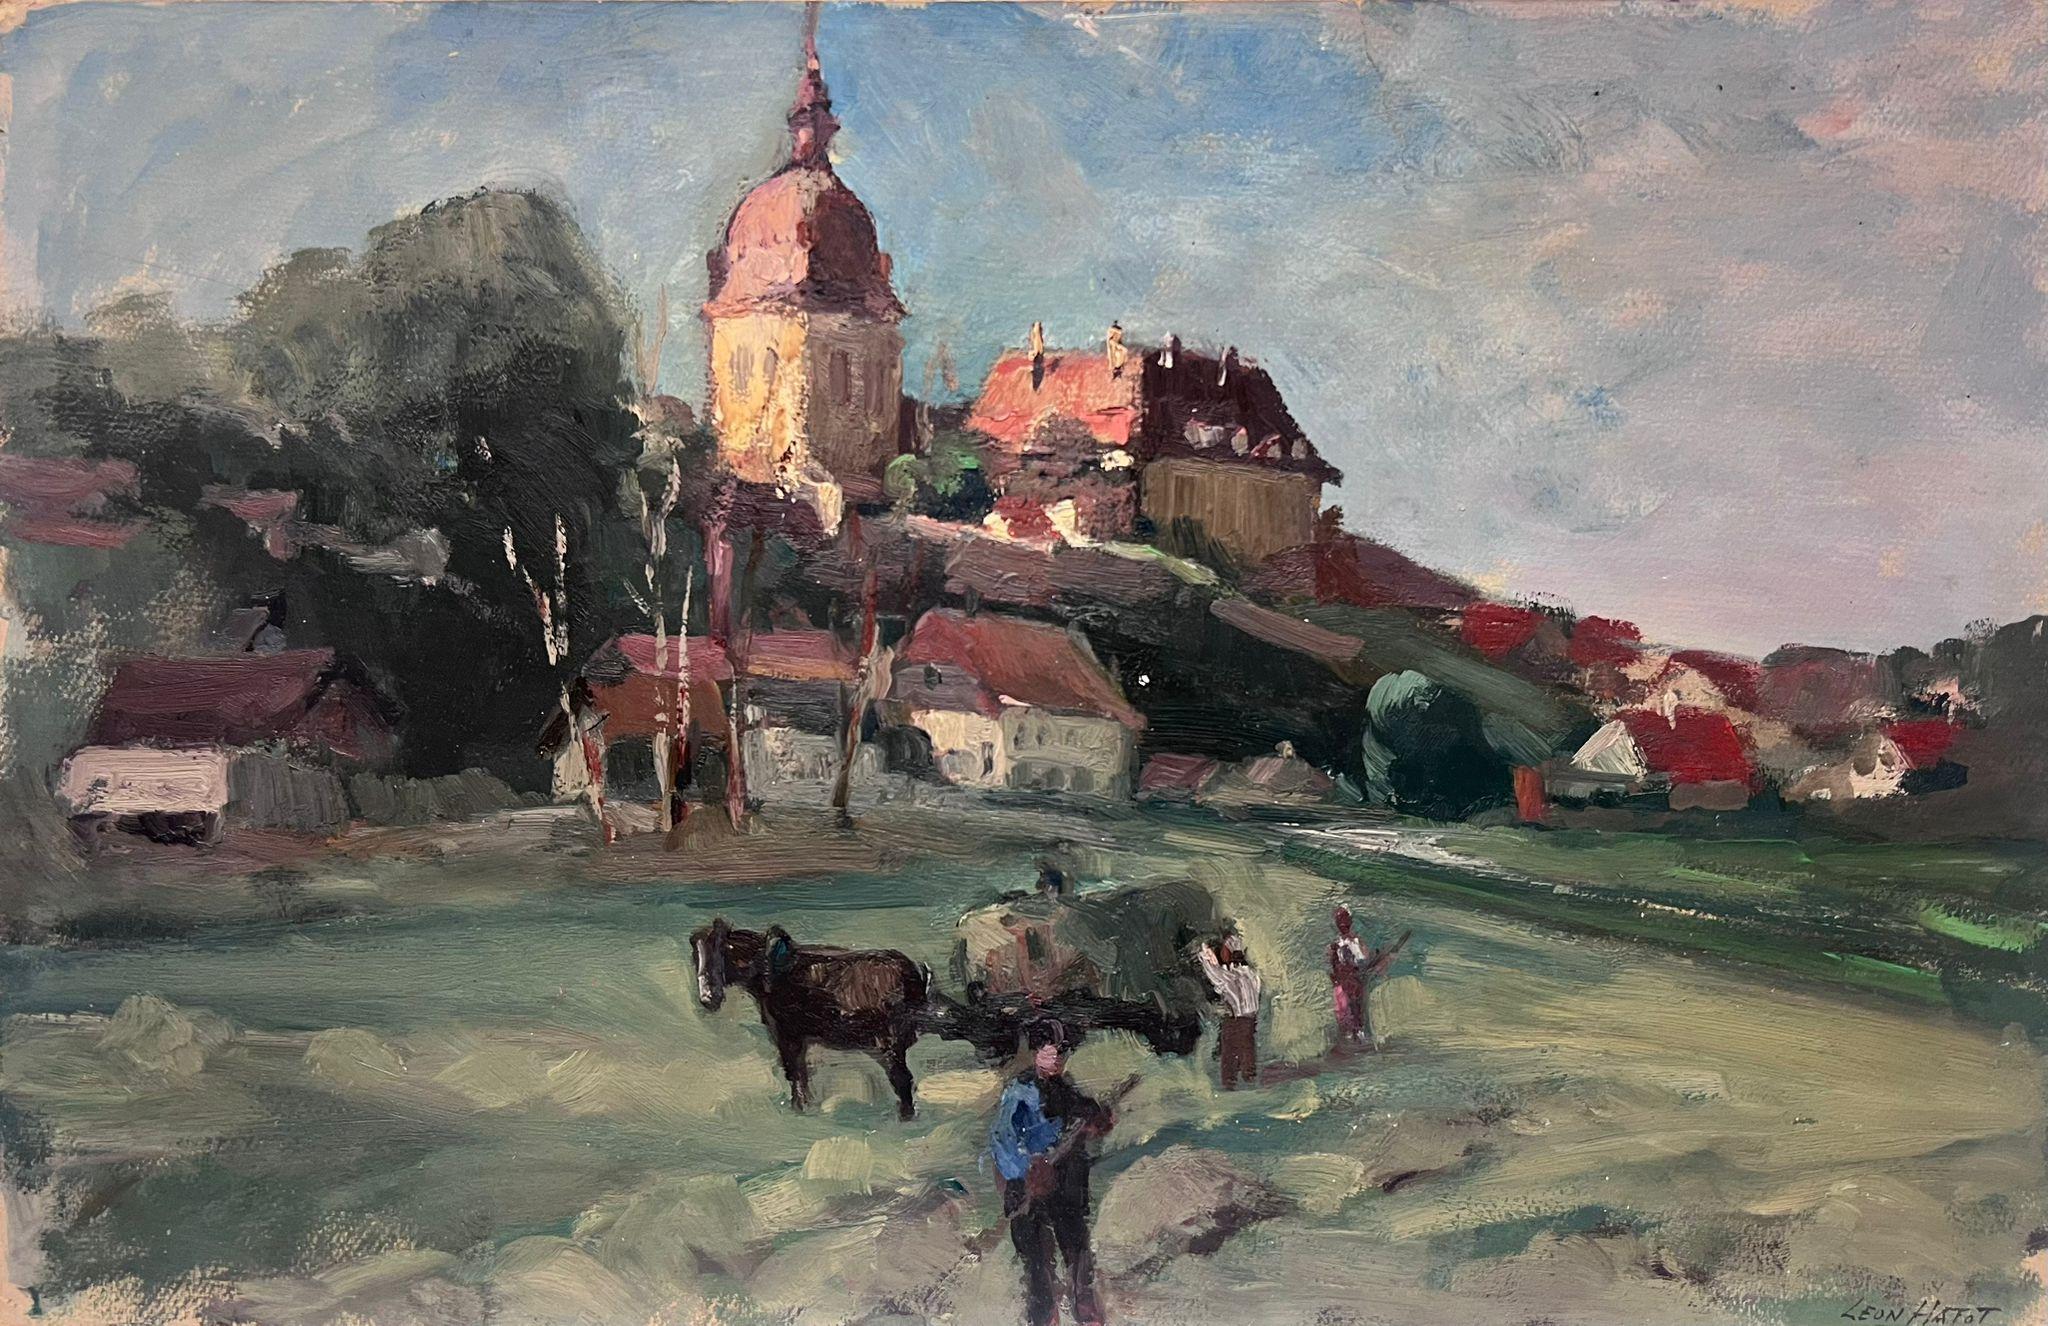 Figurative Painting Leon Hatot - Vintage French Oil Painting Farmers and Horses in A Field To The Townes (Paysans et chevaux dans un champ vers la ville)